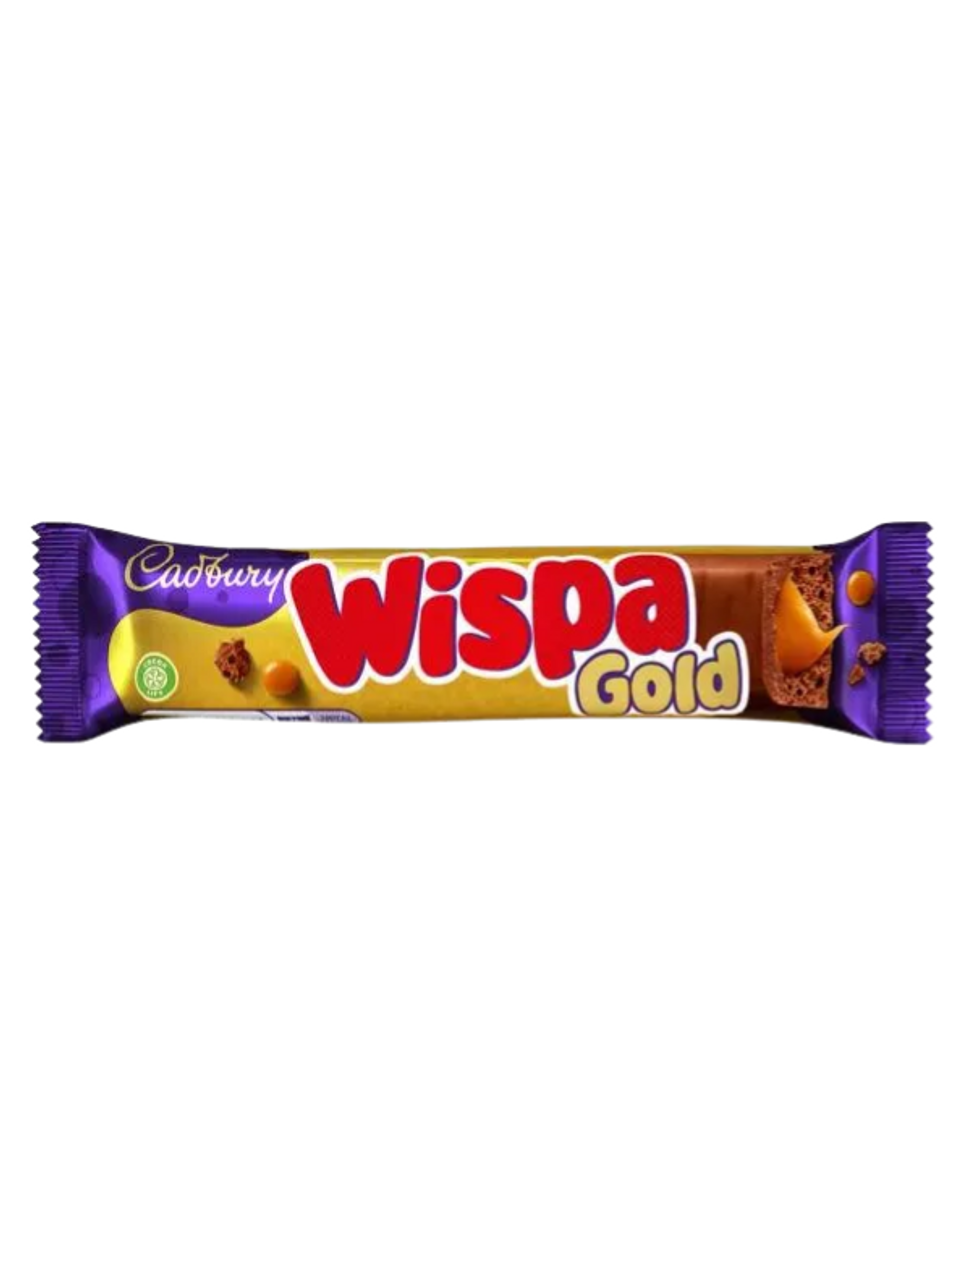 Cadbury Wispa Gold Chocolate Bar 48g x 48 - JL Brooks